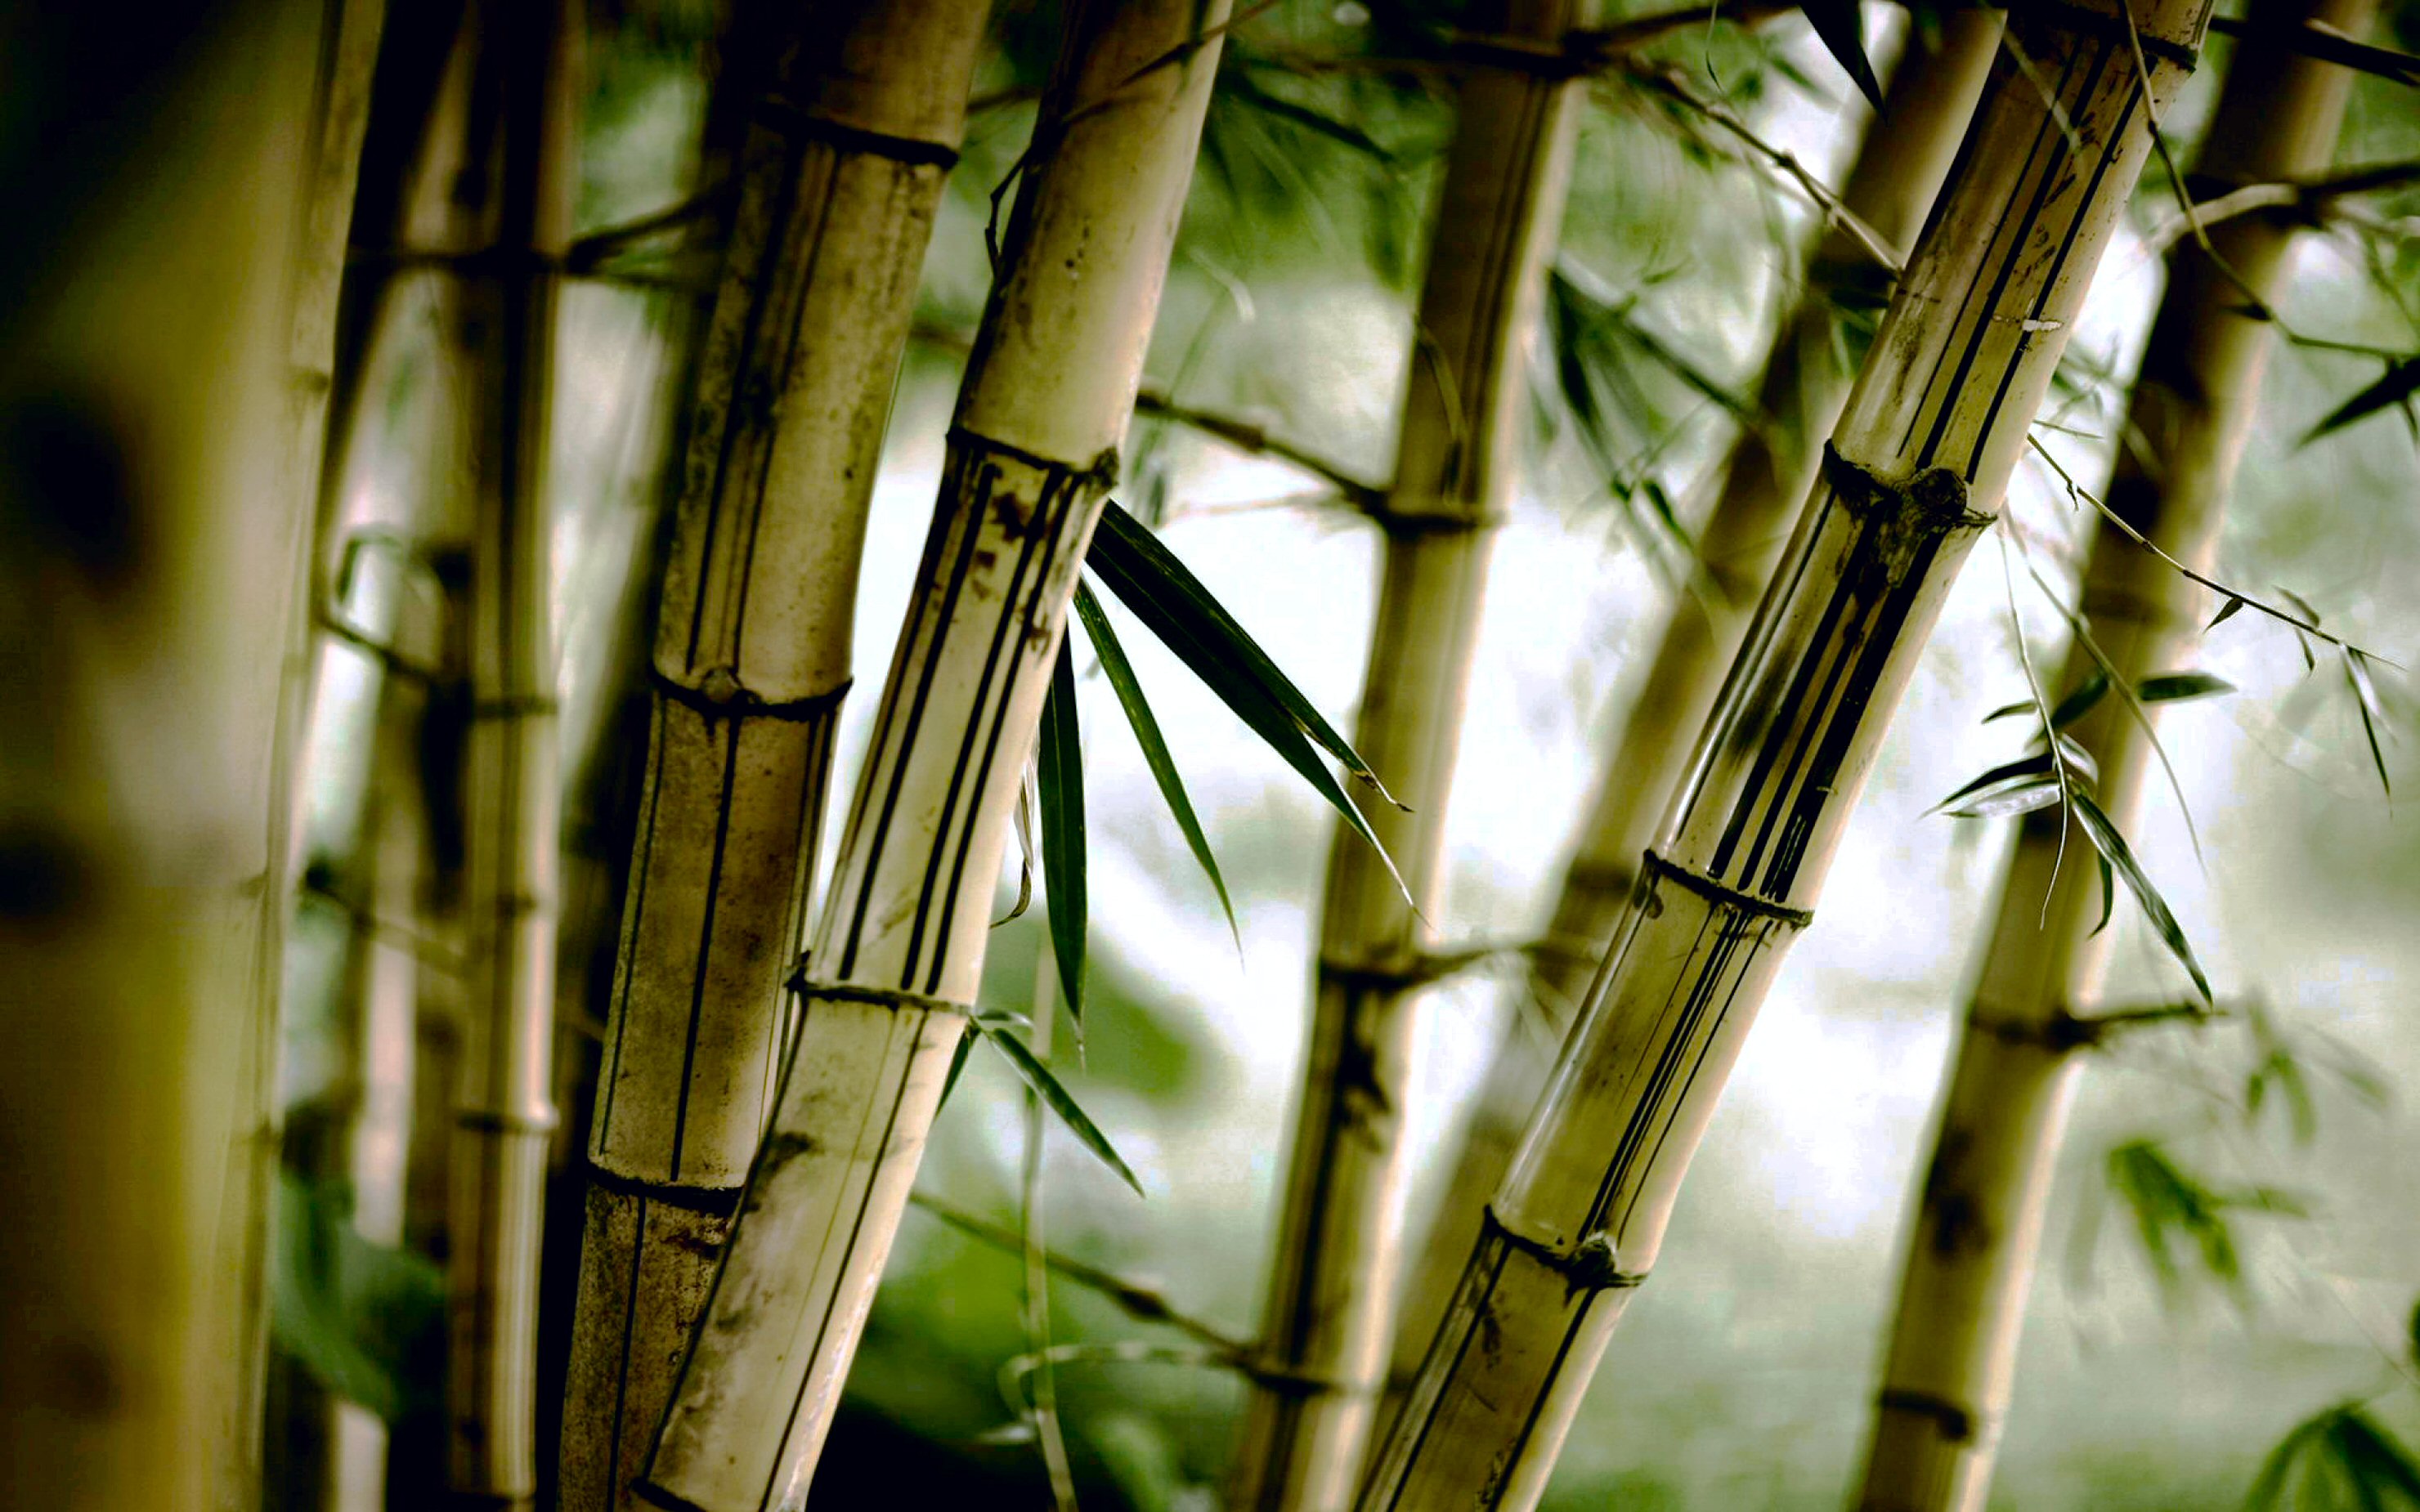 papier peint en bambou,bambou,vert,tige de plante,plante,famille d'herbe